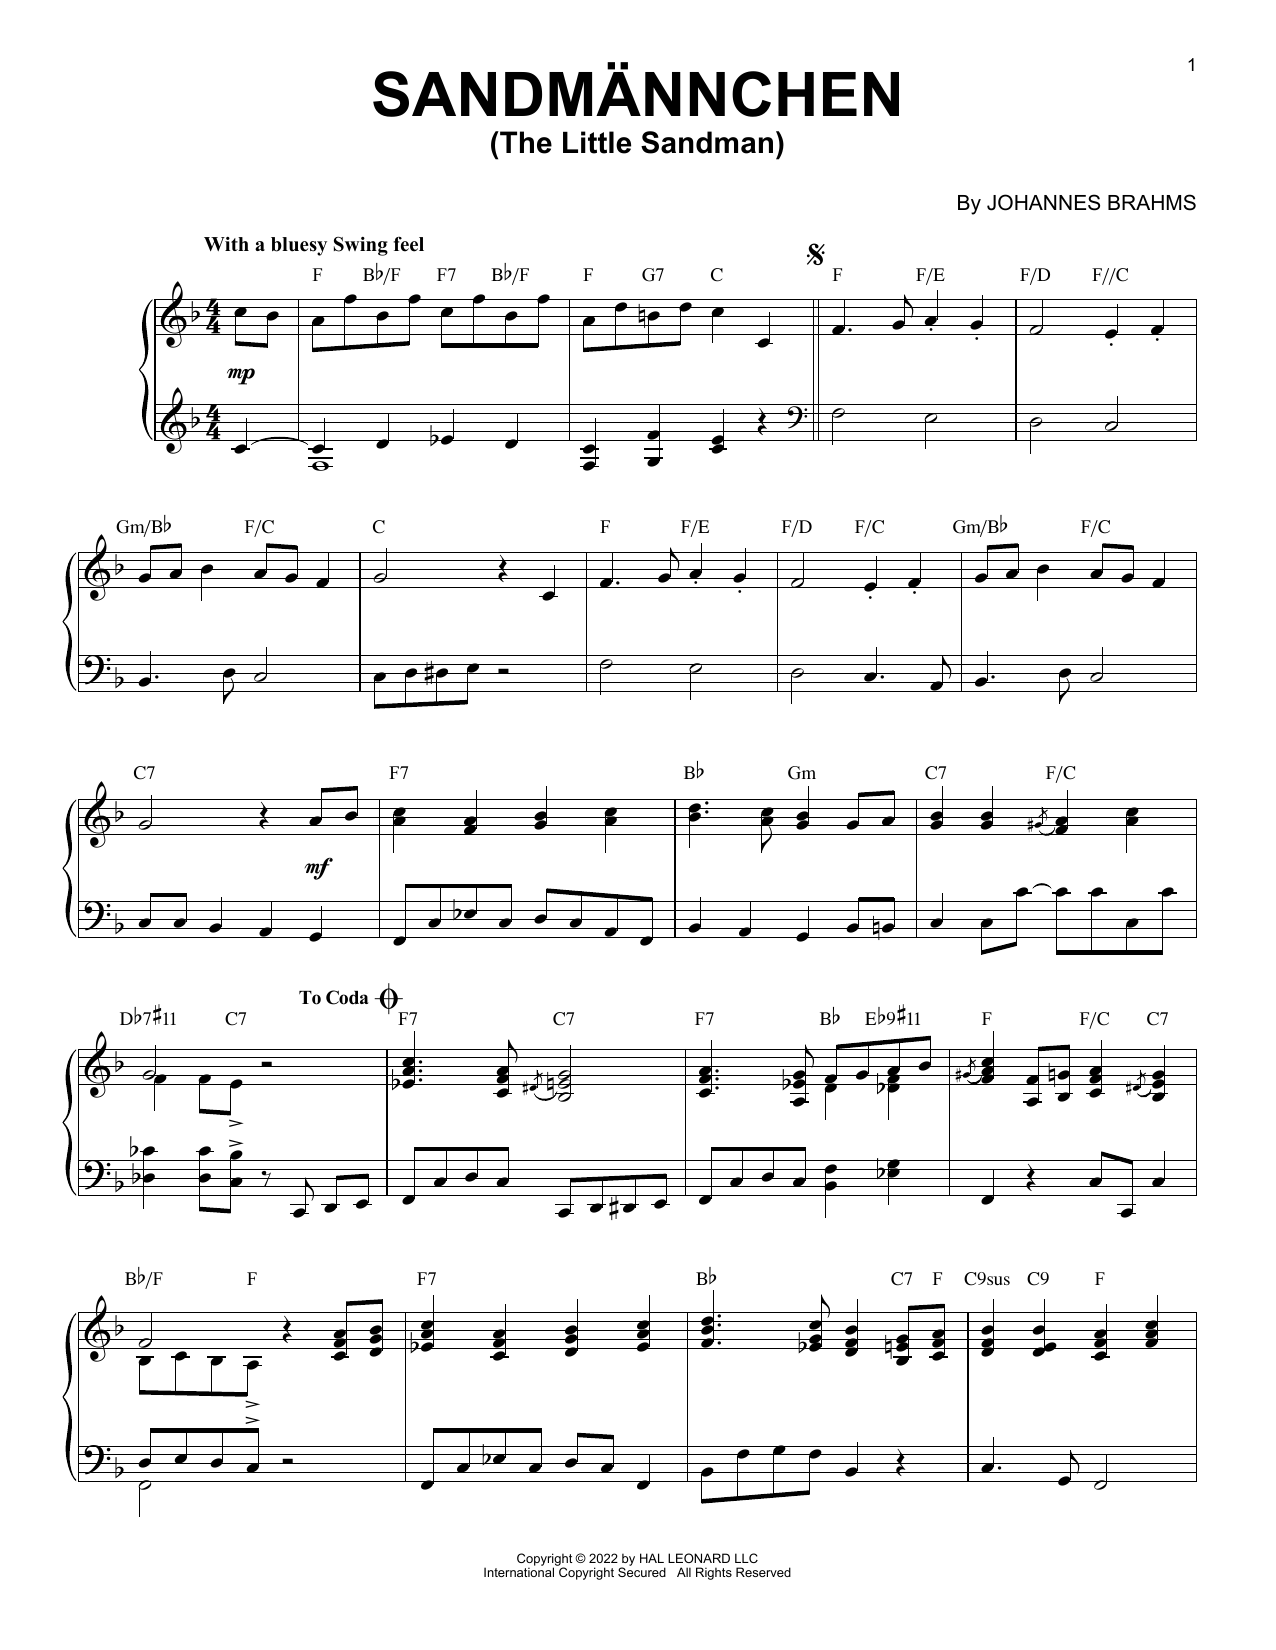 Johannes Brahms Sandmannchen (The Little Sandman), WoO 31, No. 4 [Jazz version] (arr. Brent Edstrom) Sheet Music Notes & Chords for Piano Solo - Download or Print PDF